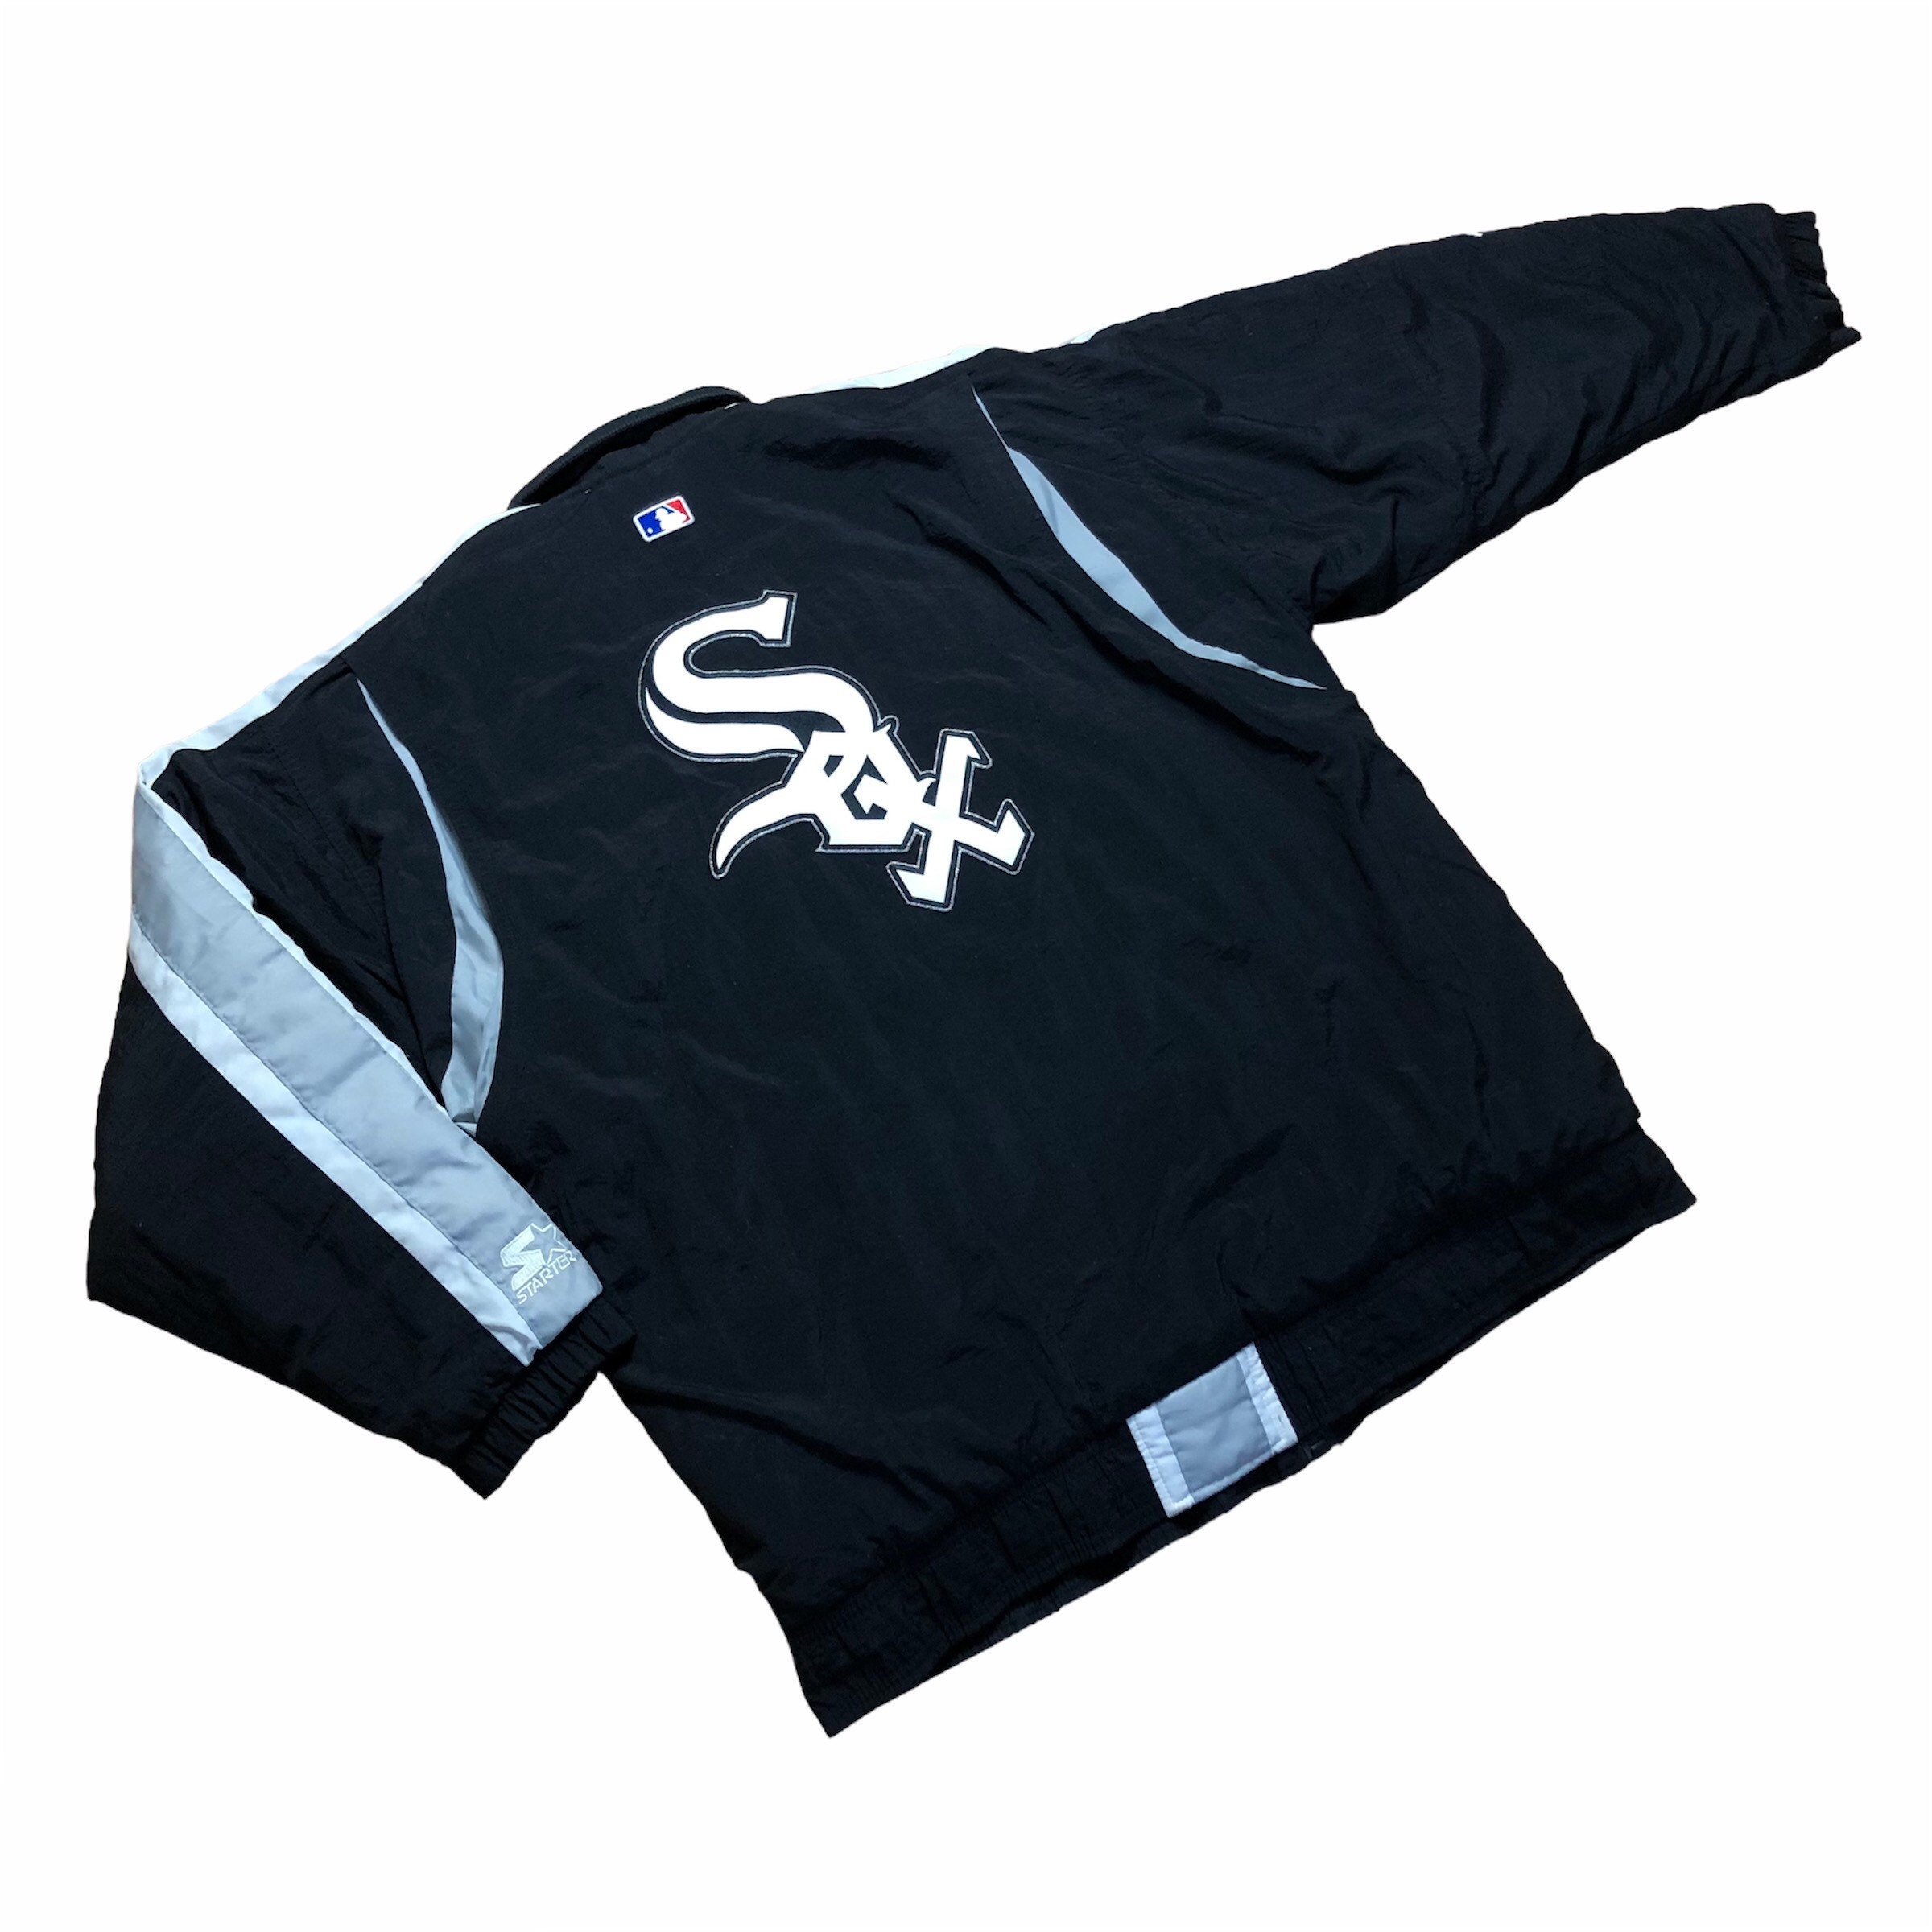 Authentic BP Jacket Chicago White Sox 1991